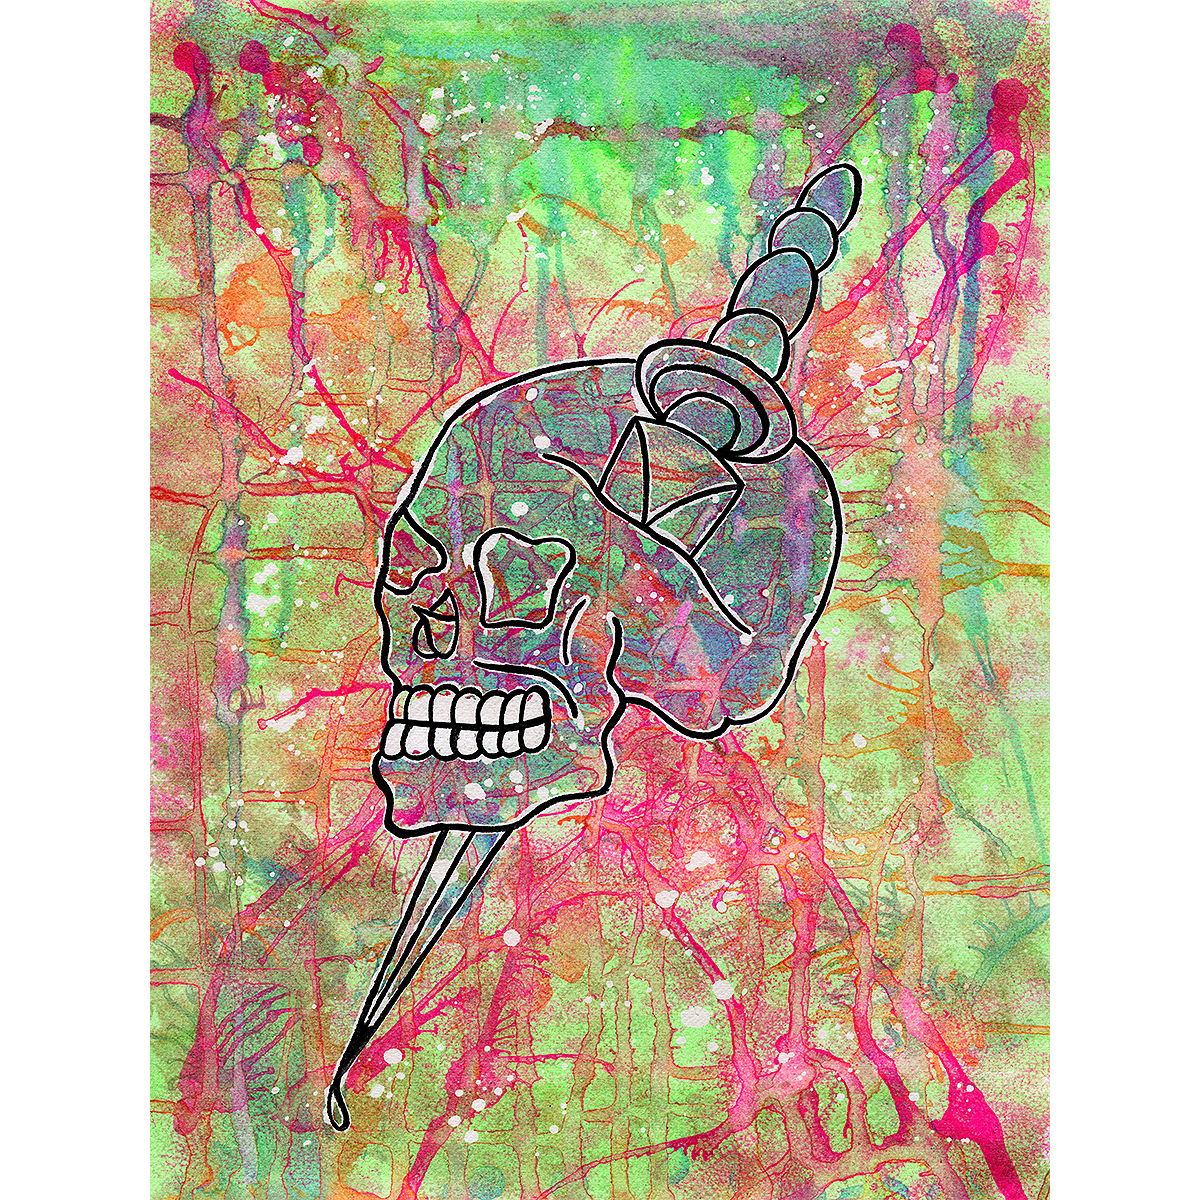 Sean Martin "Skull and Dagger" Giclee Print